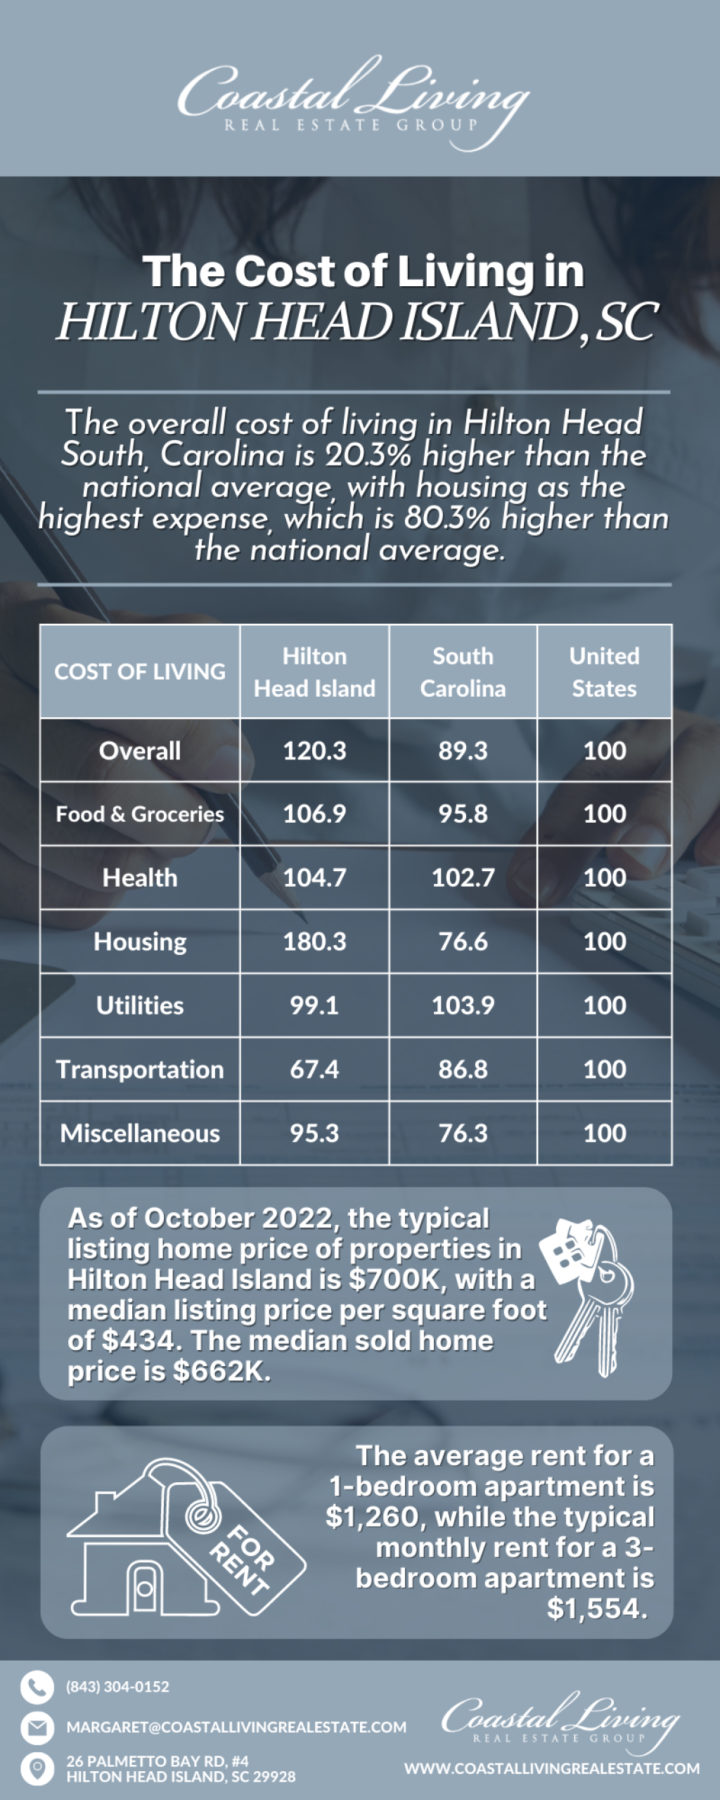 Cost of Living in Hilton Head Island, SC